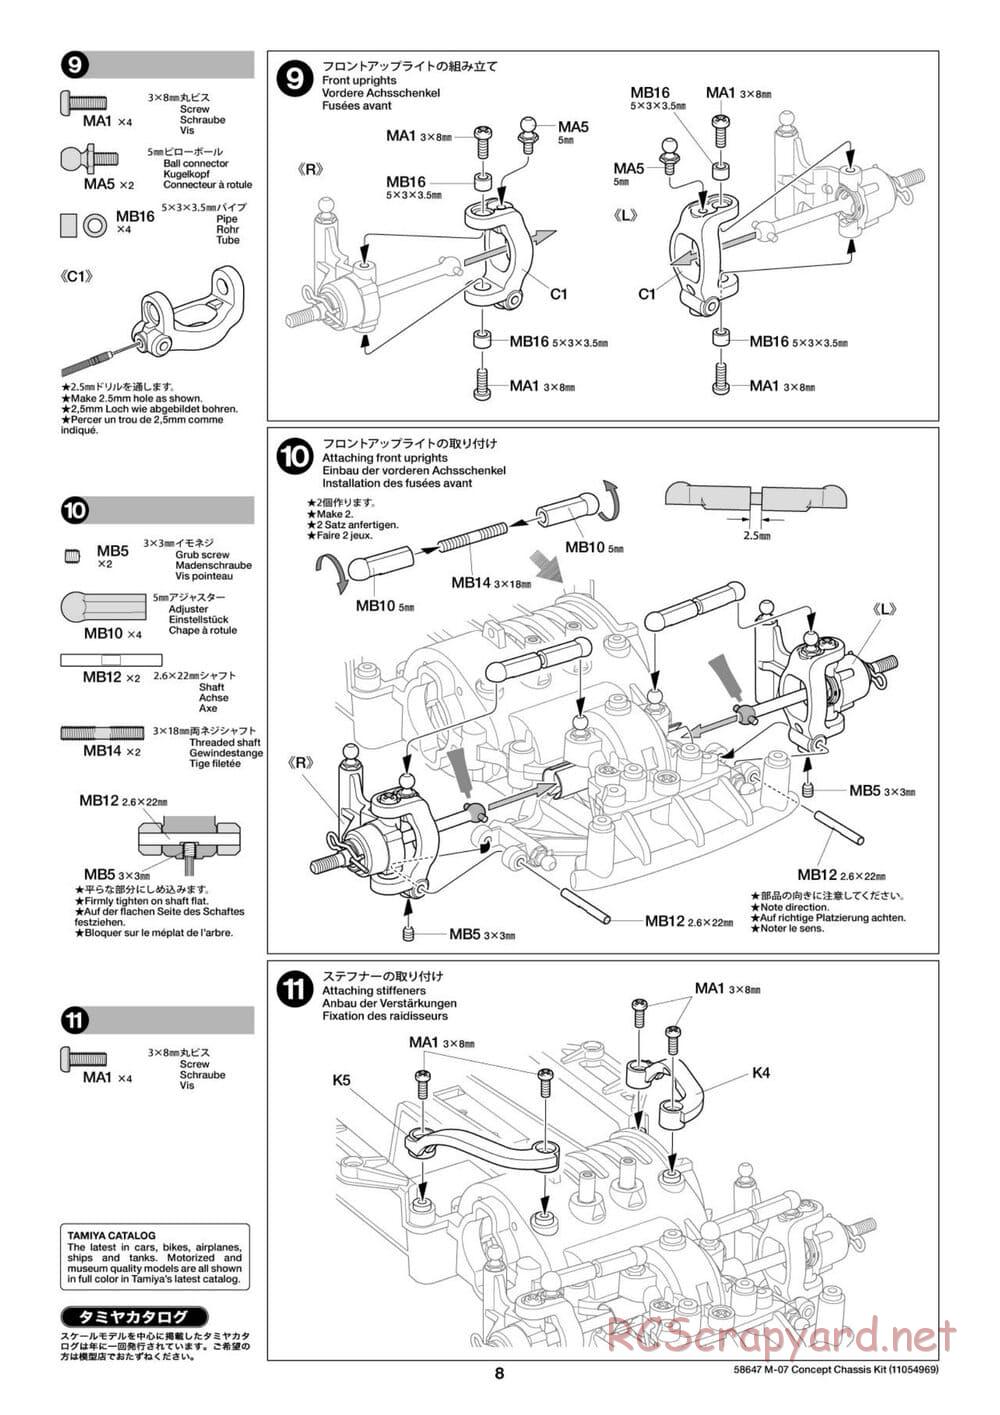 Tamiya - M-07 Concept Chassis - Manual - Page 8